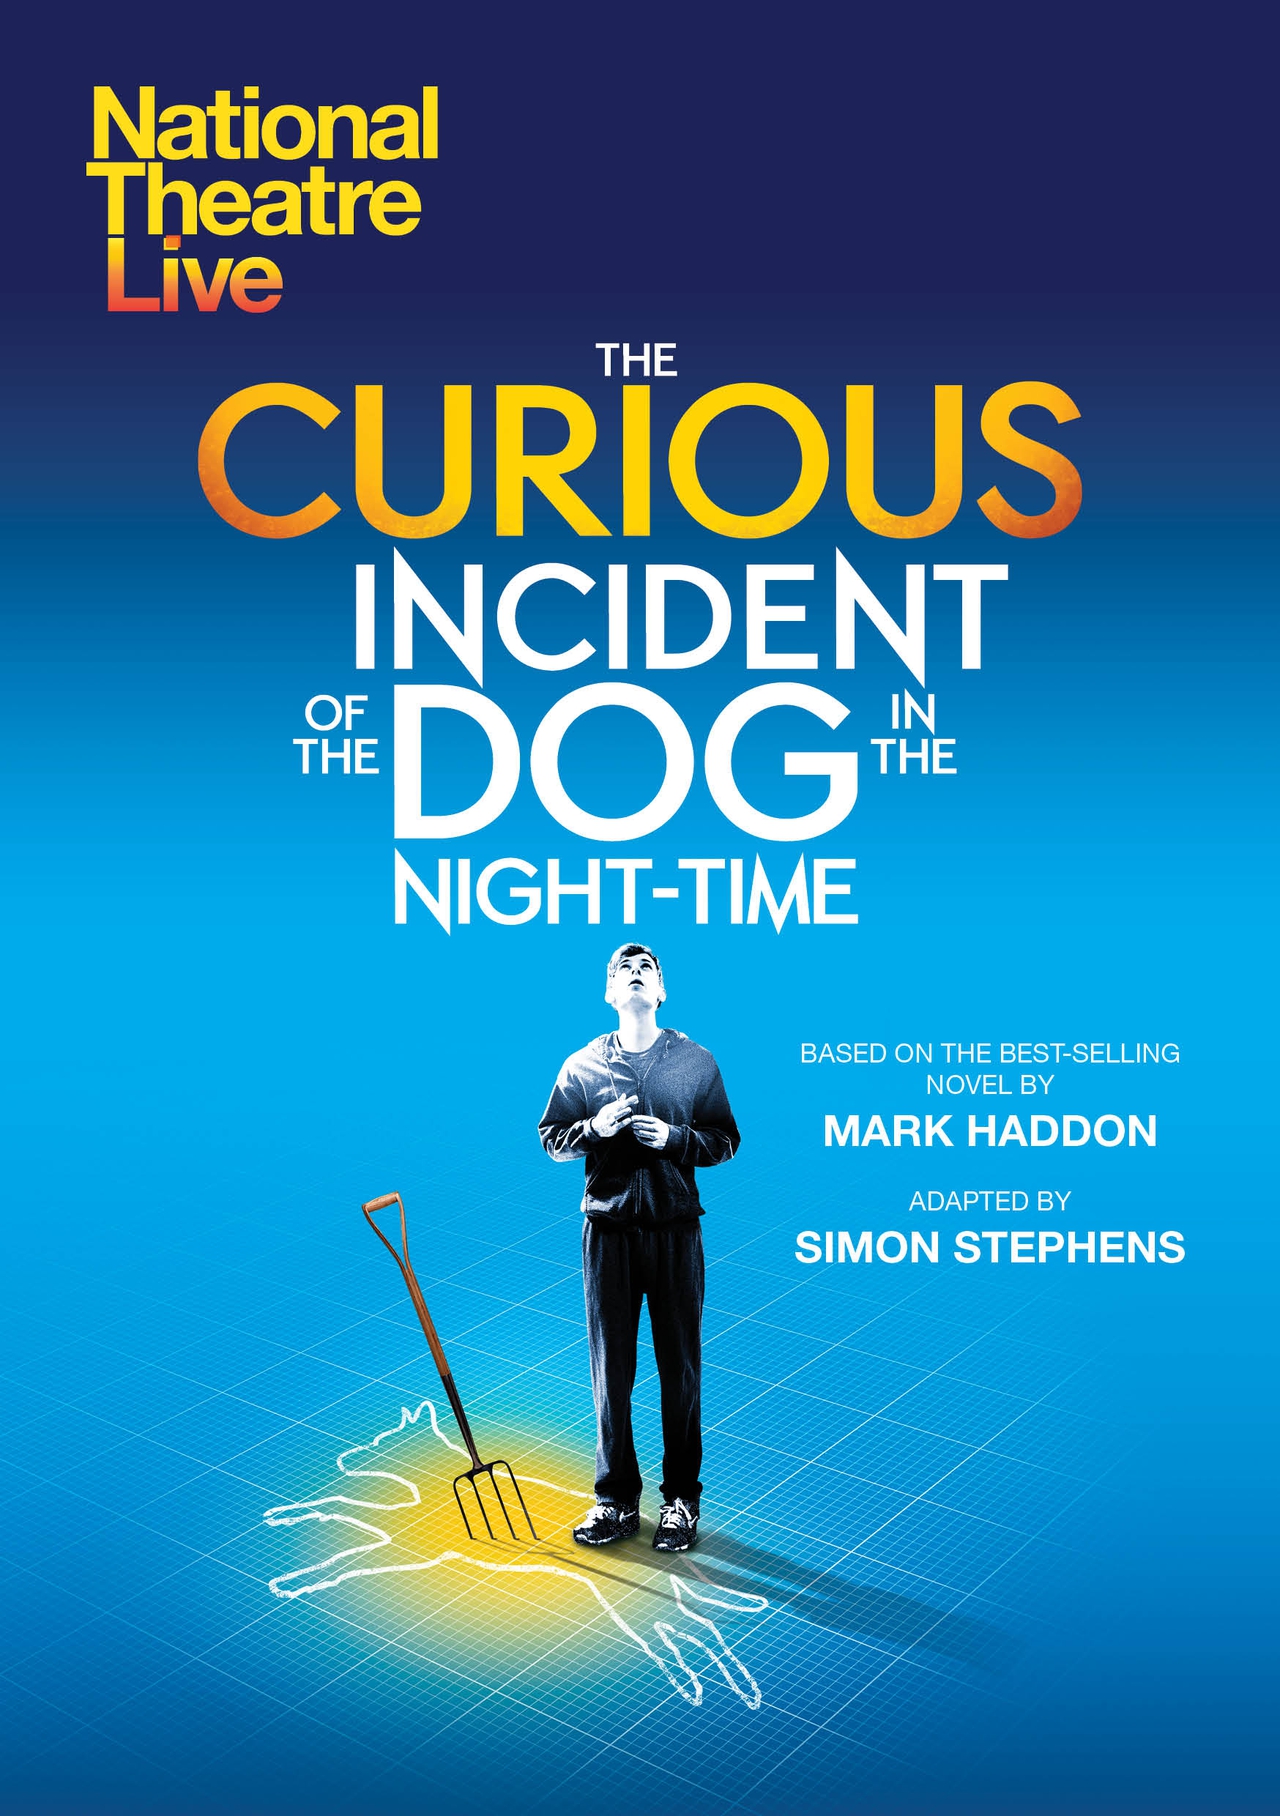 لوک تریداوی در صحنه فیلم سینمایی National Theatre Live: The Curious Incident of the Dog in the Night-Time